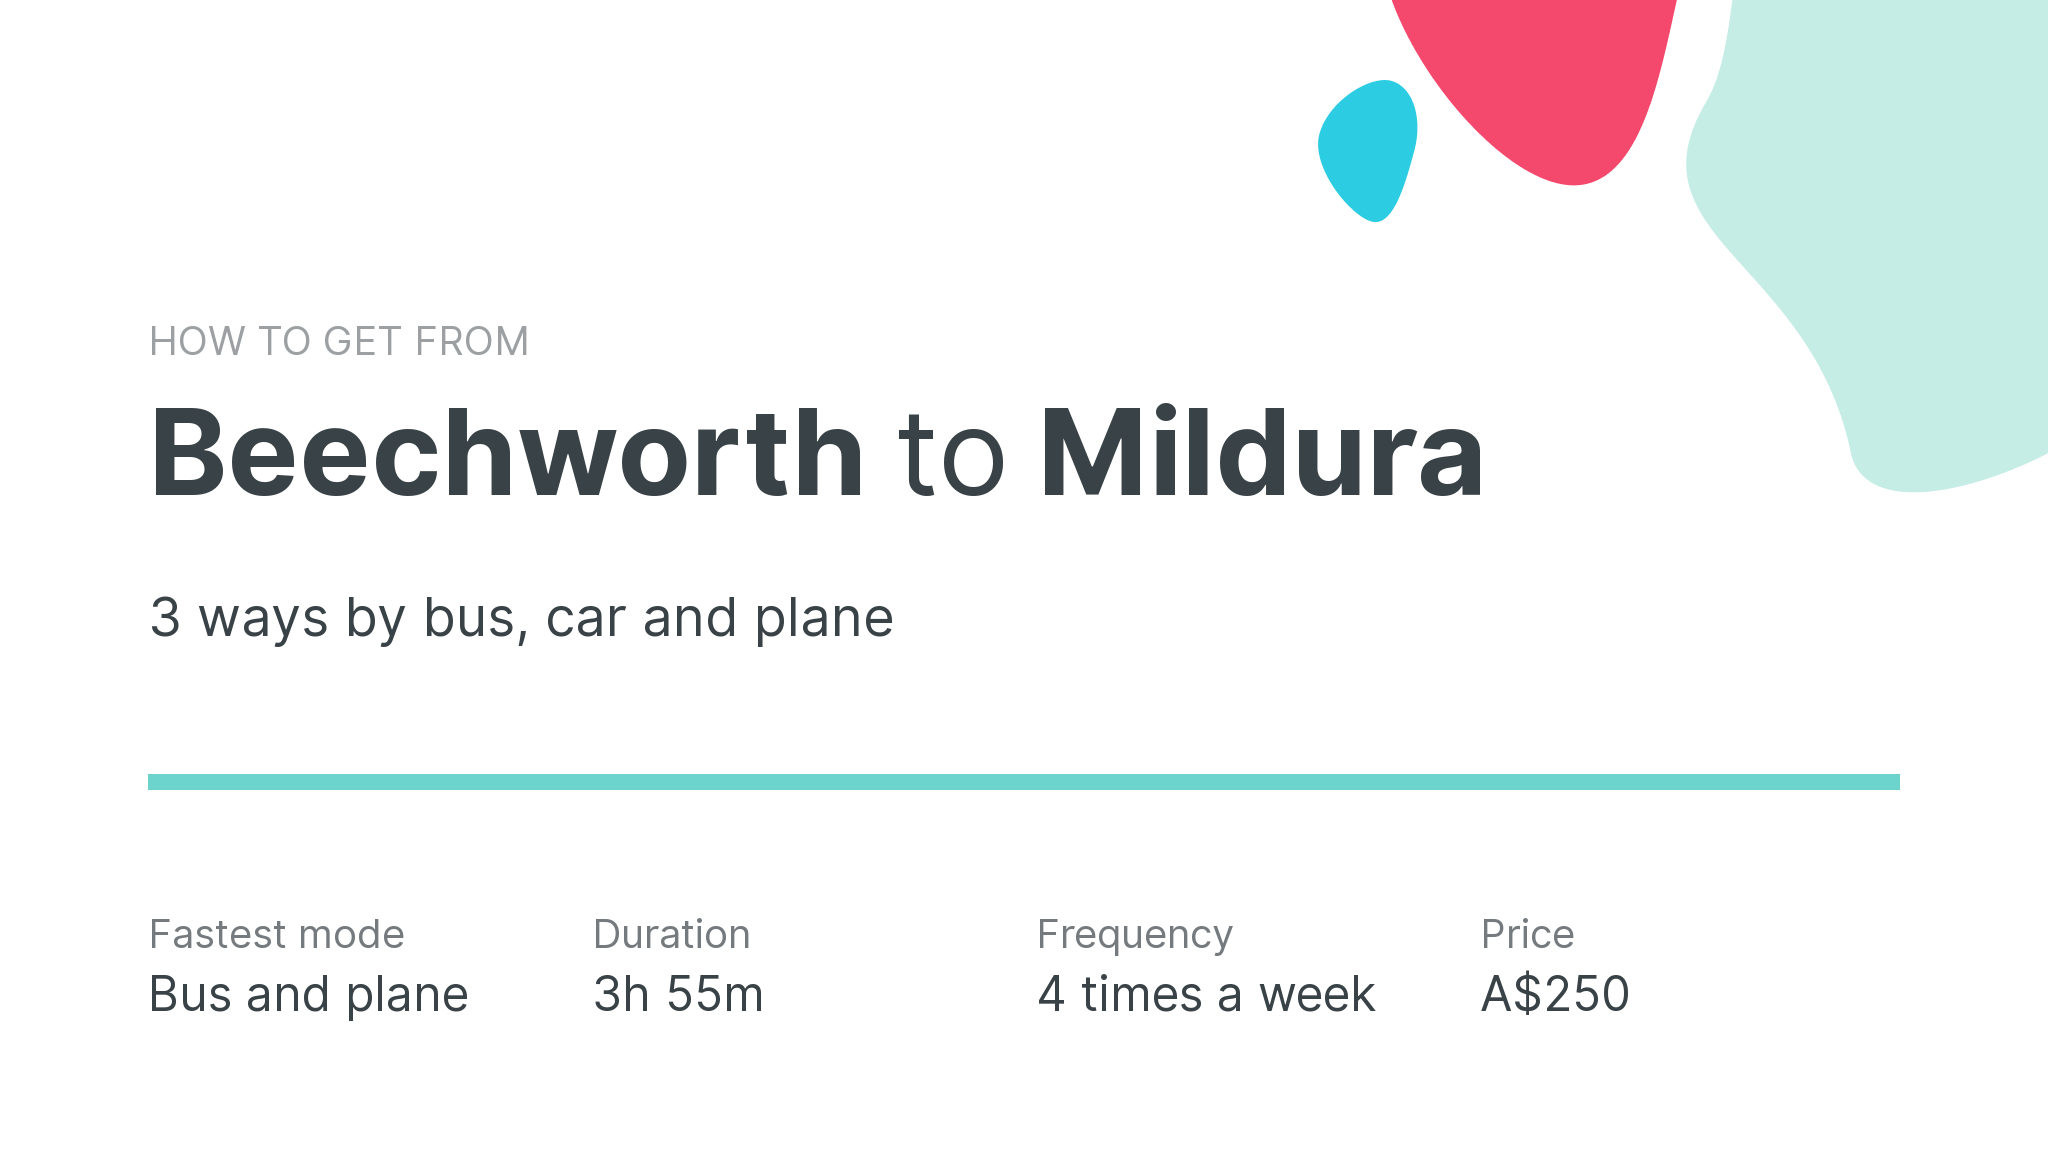 How do I get from Beechworth to Mildura